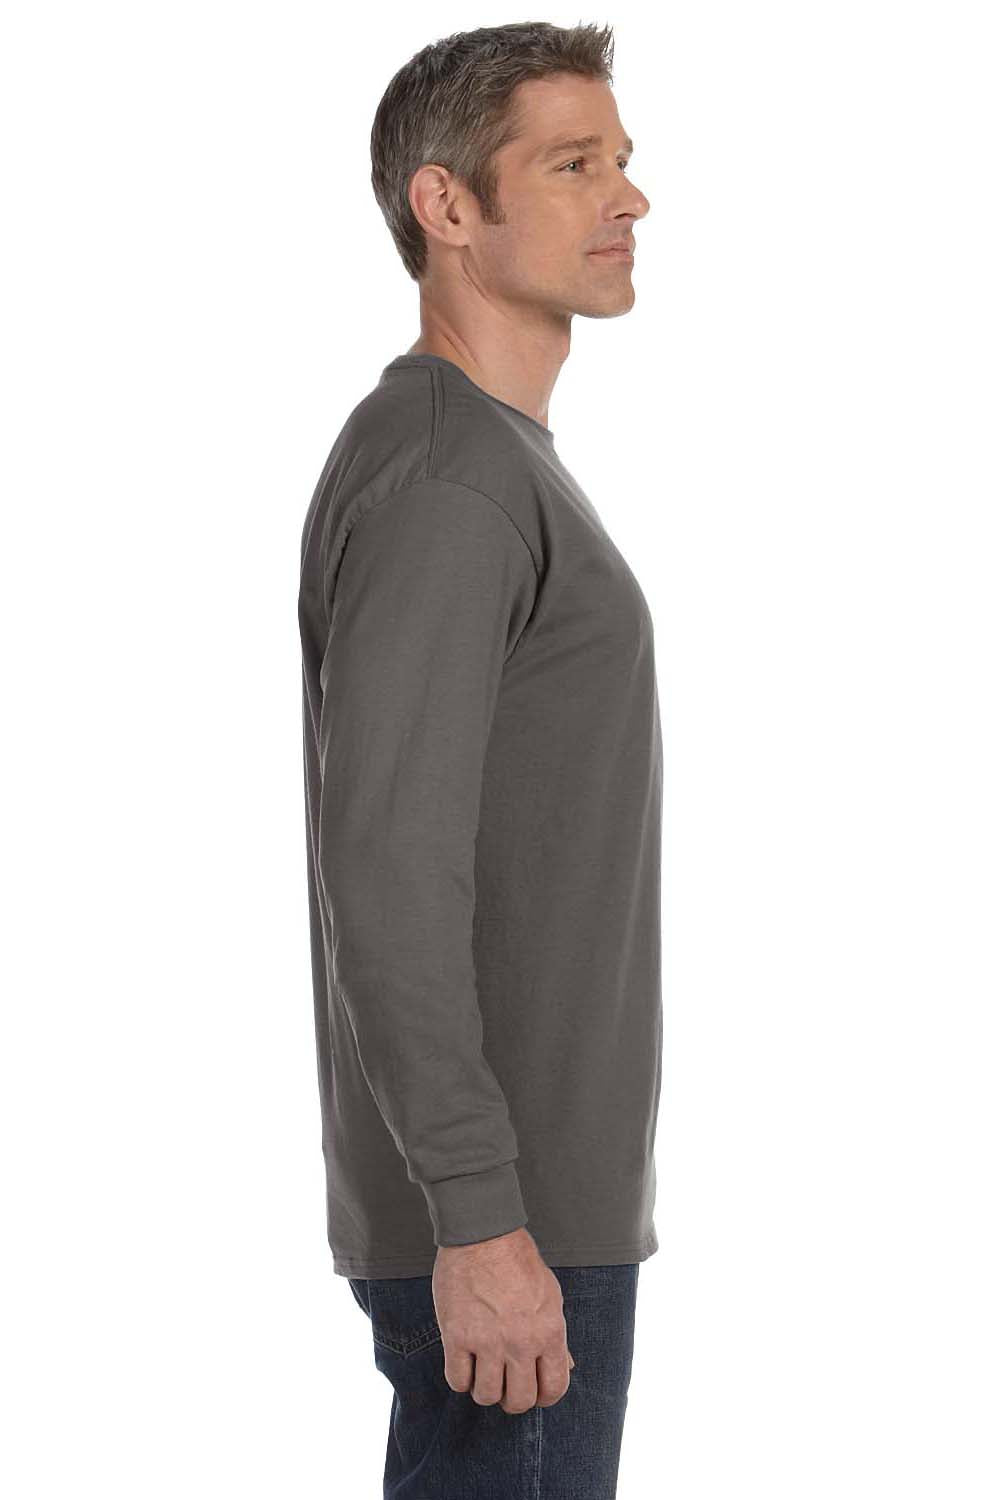 Hanes 5586 Mens ComfortSoft Long Sleeve Crewneck T-Shirt Smoke Grey Side